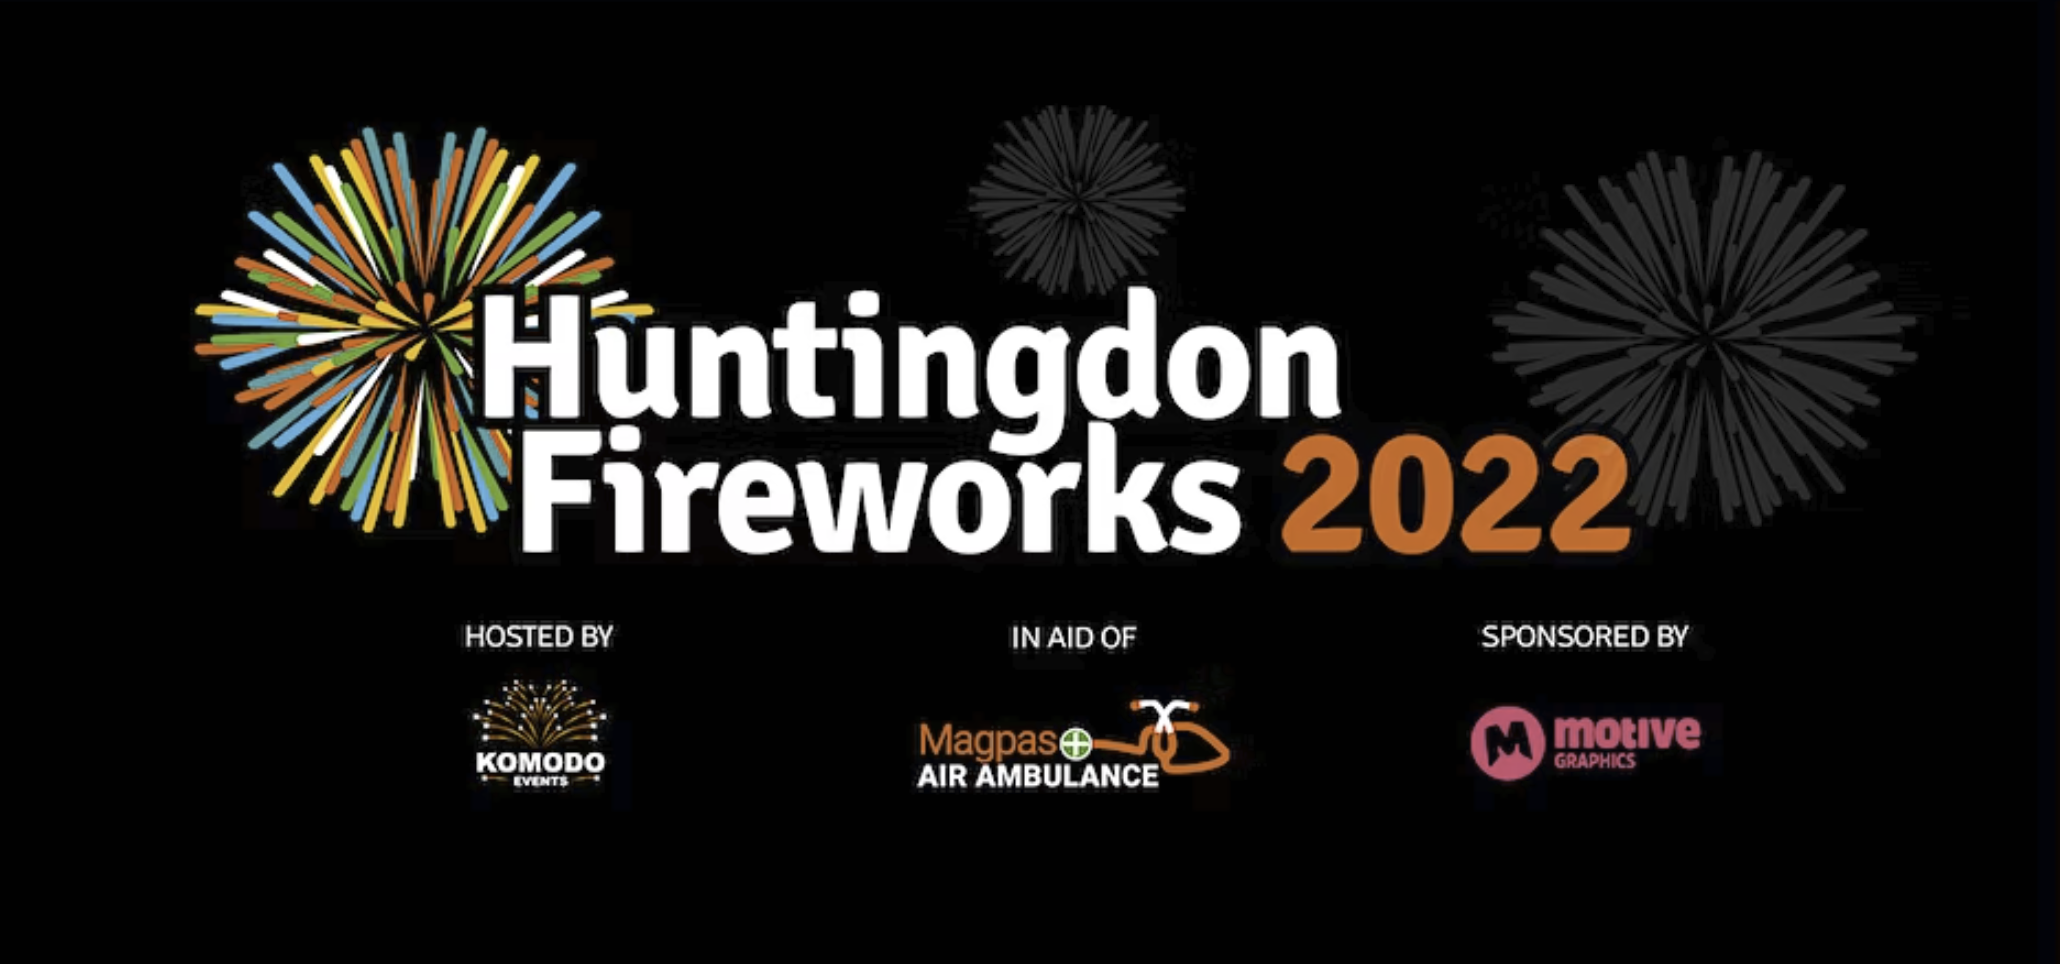 Magpas Huntingdon Fireworks Display sponsored by Motive Graphics